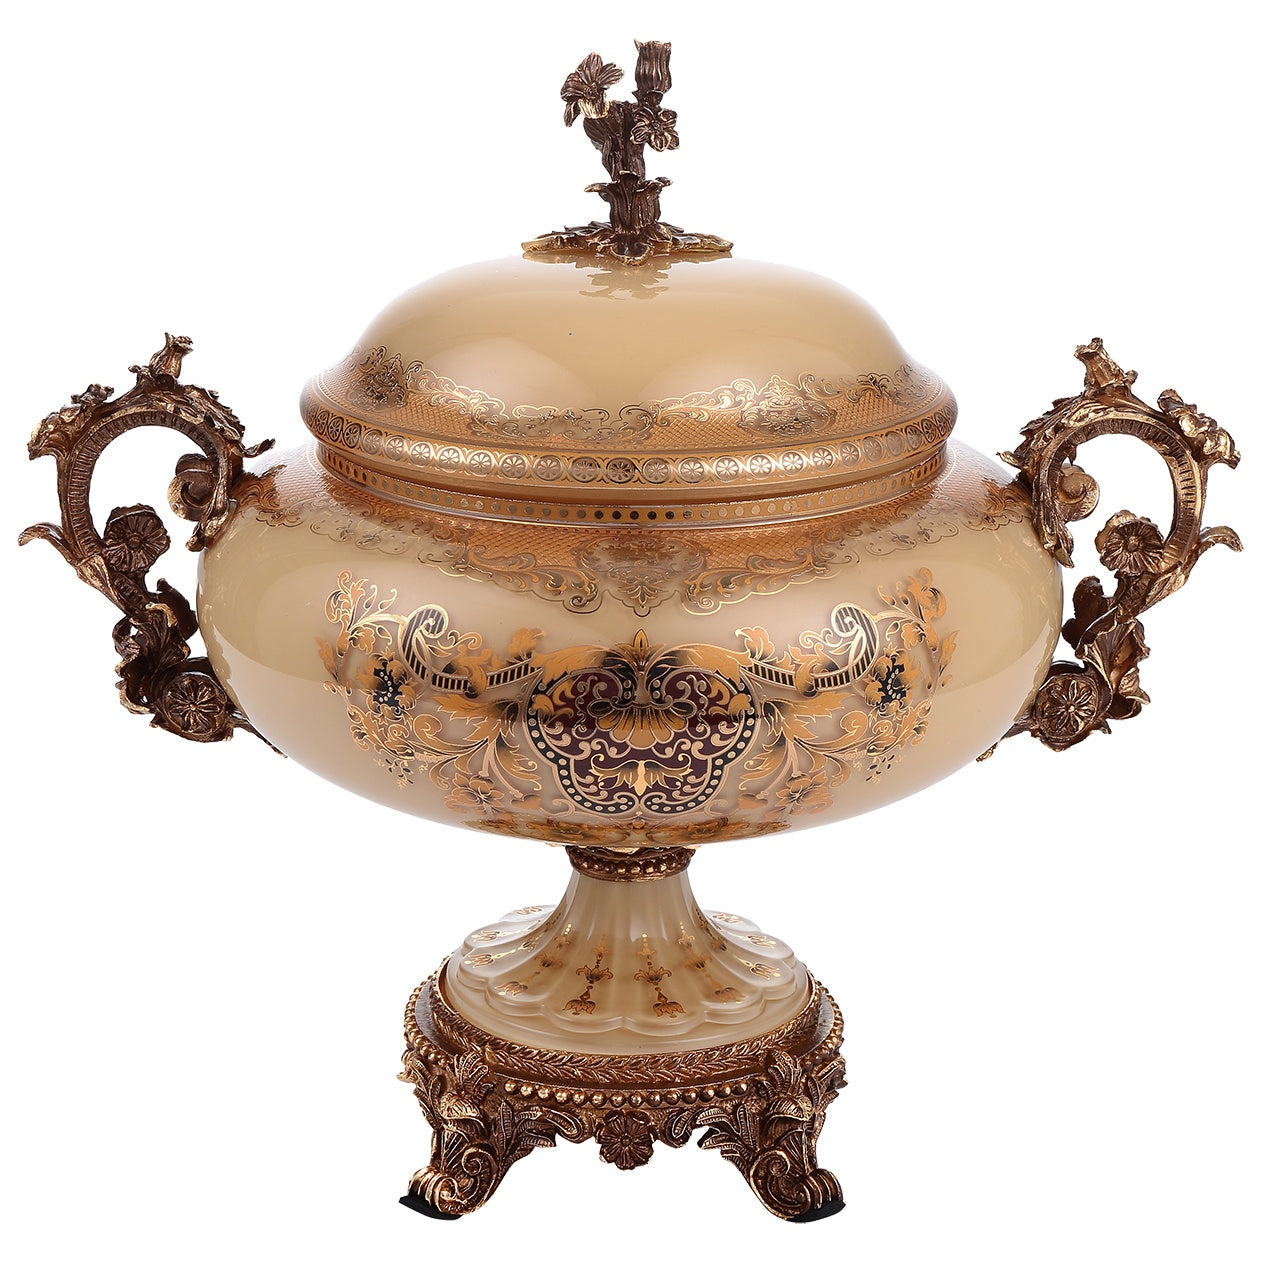 Urn in Bronze & Mocha Cream & Gold Finish AC6011H European Traditional Victorian